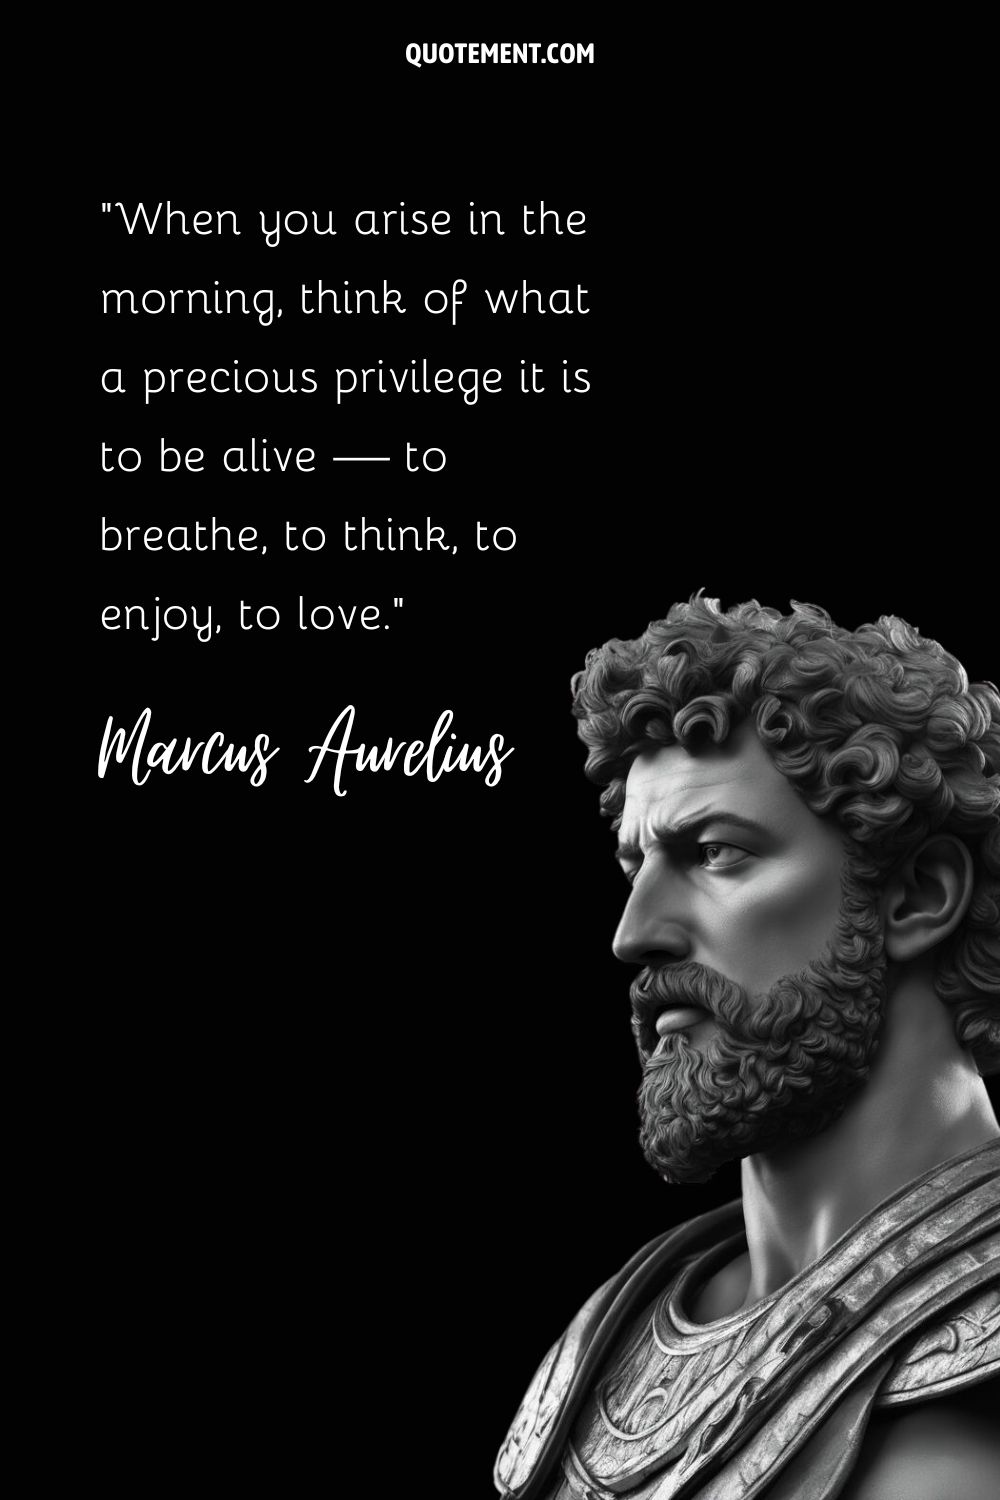 Majestuoso Marco Aurelio en estoico reposo.